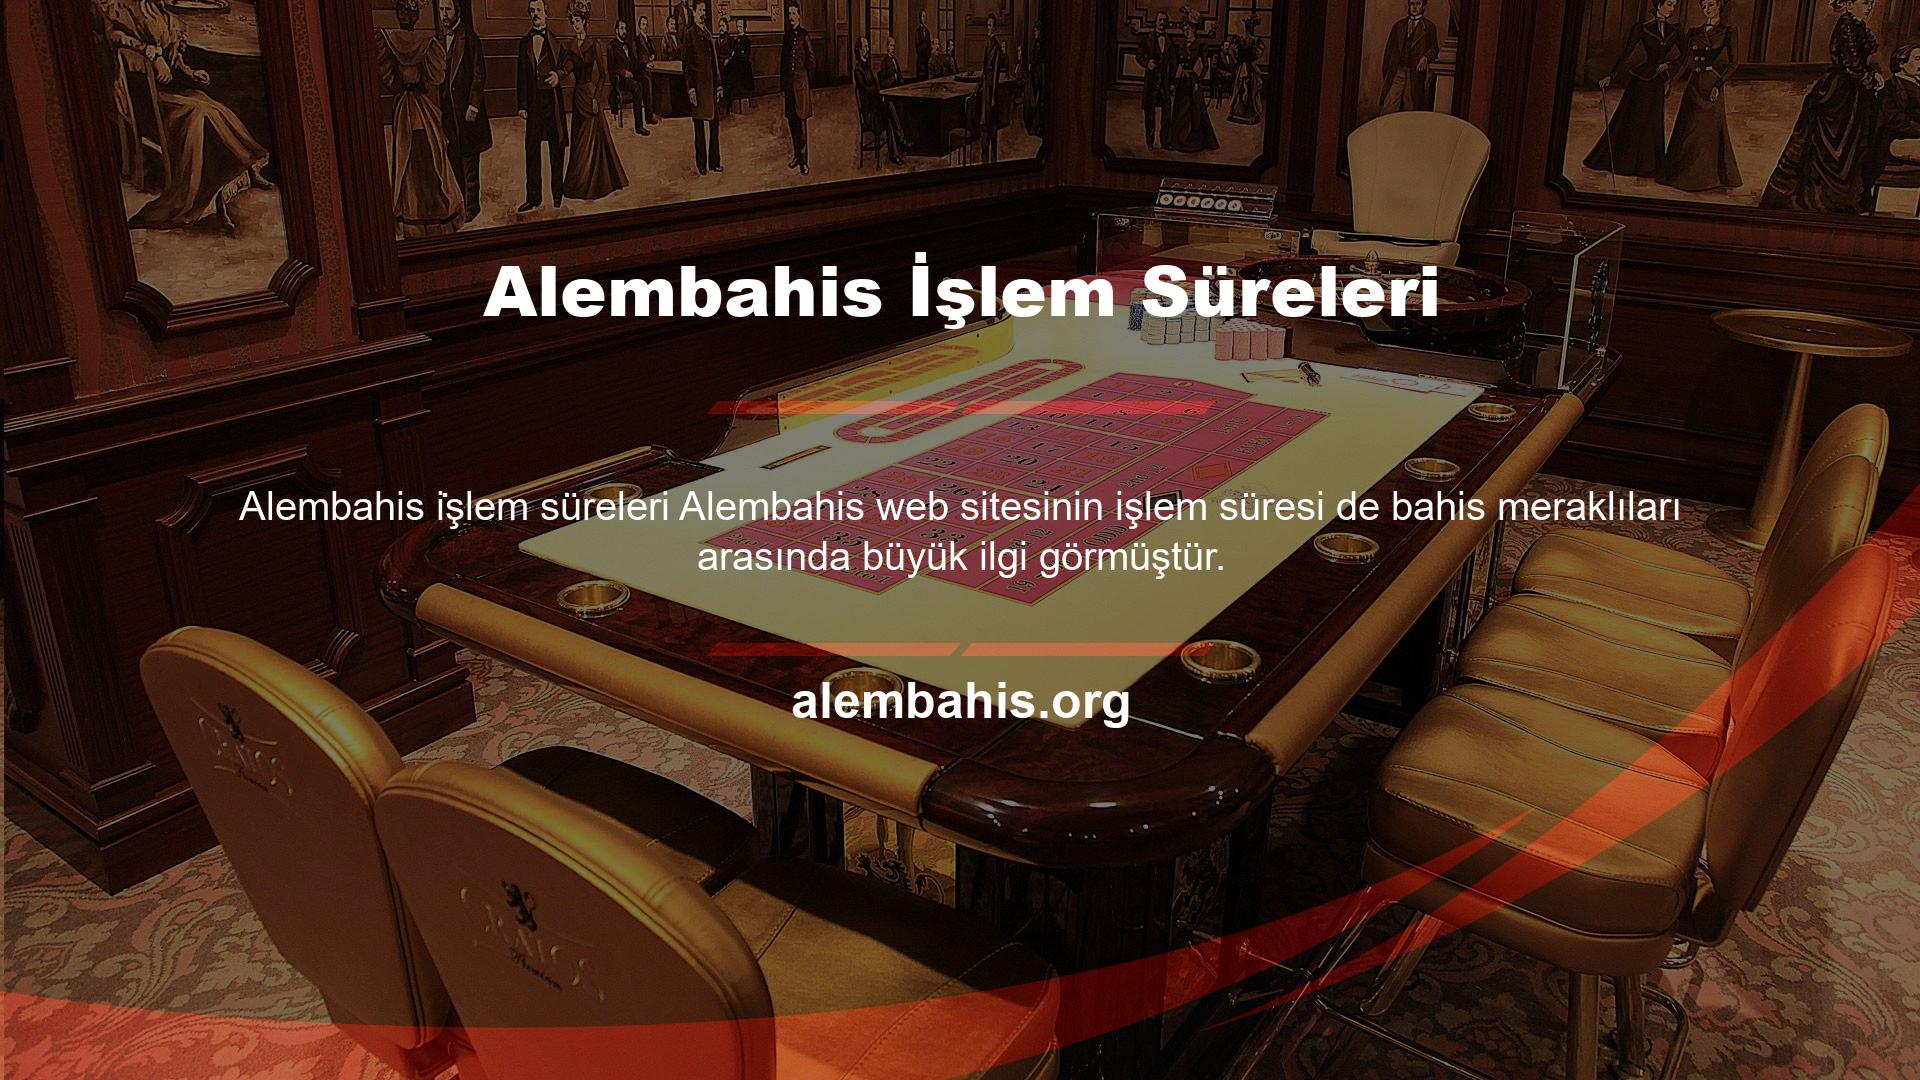 Alembahis web sitesi 7/24 müşteri hizmetleri web sitesidir